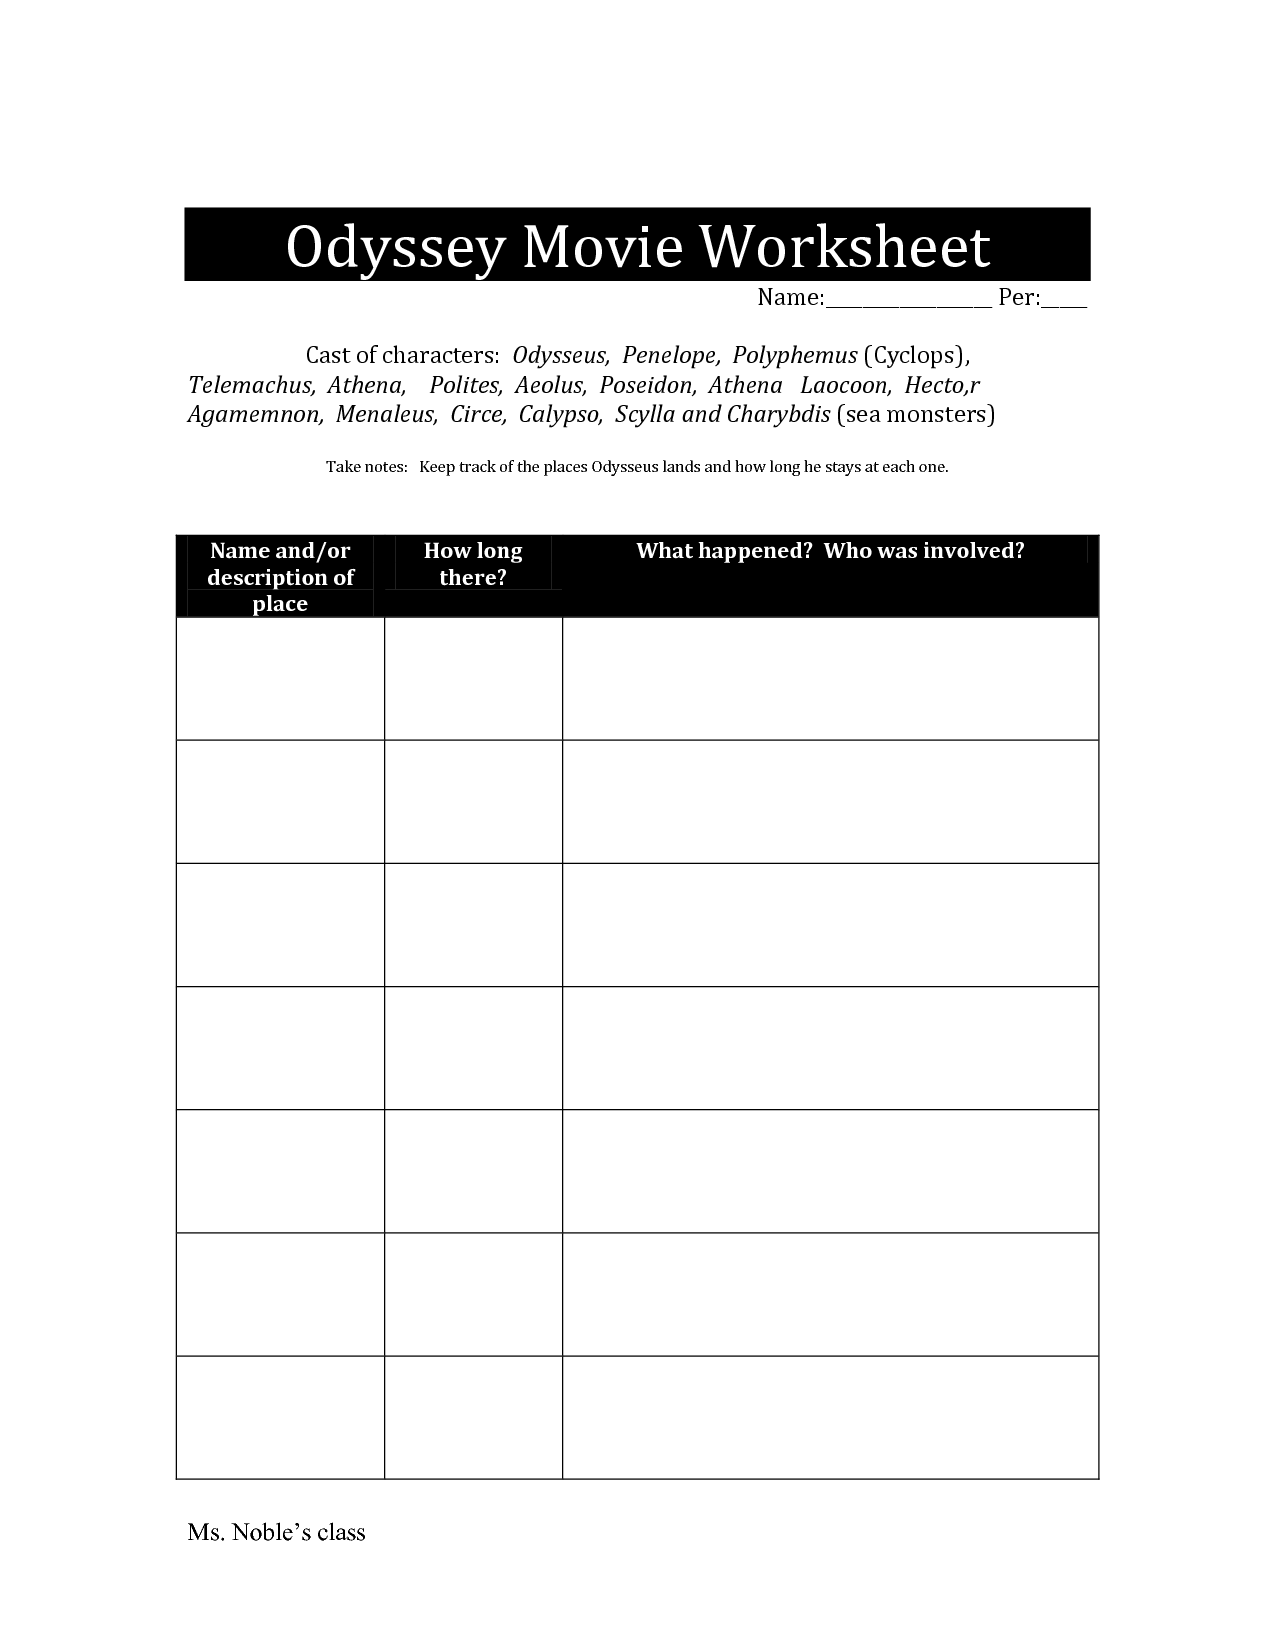 Odyssey Movie Worksheet Image